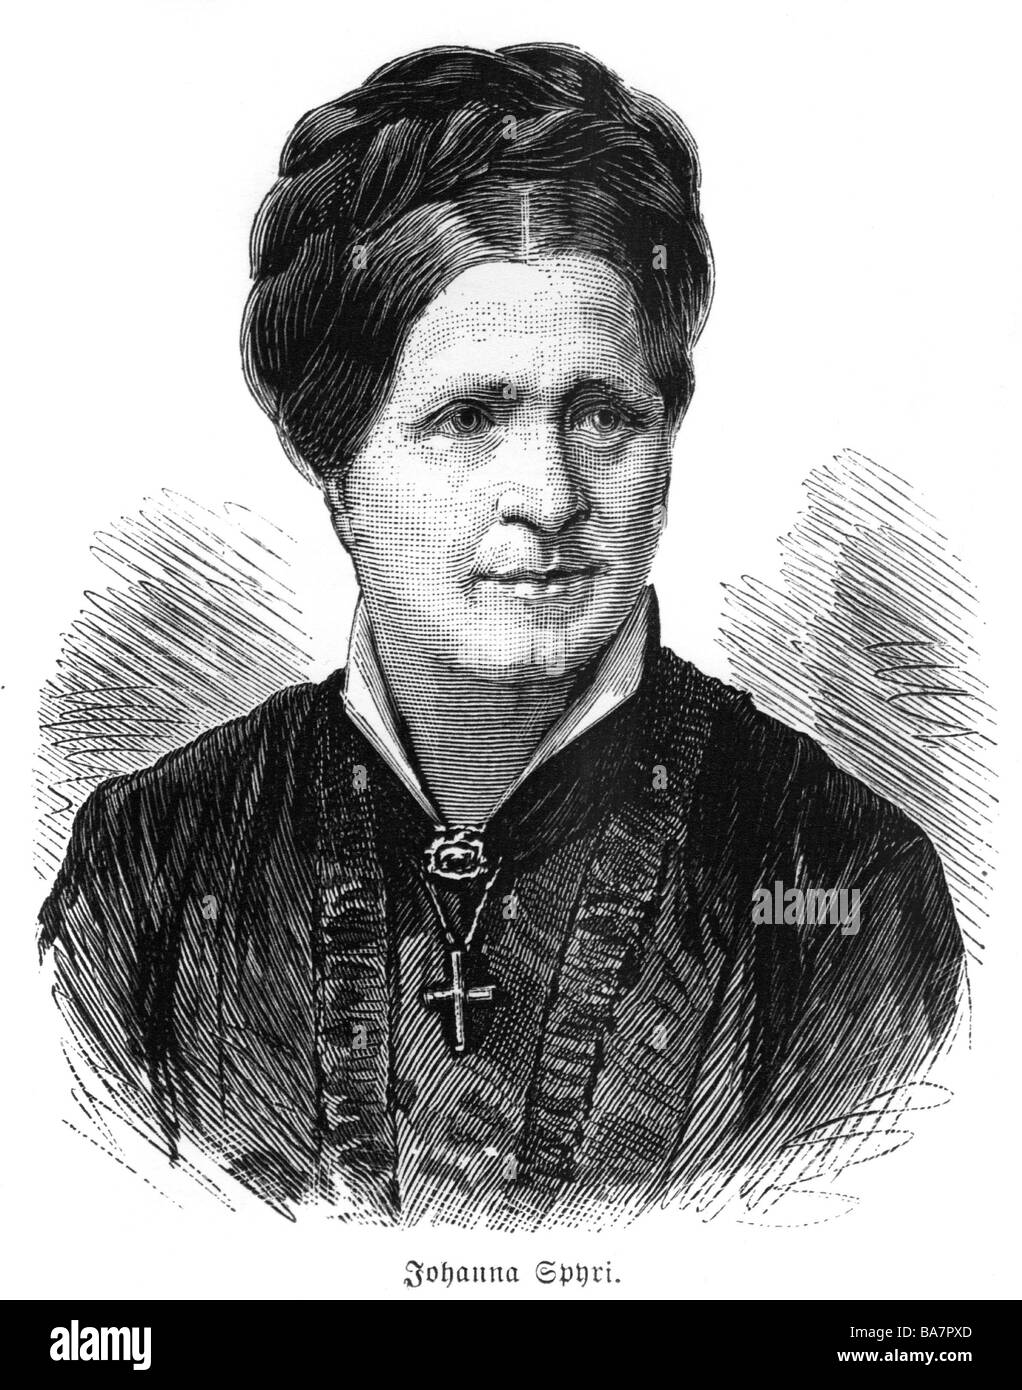 Spyri, Johanna, 12.6.1819 - 7.7 1901, Swiss author / writer, portrait, wood engraving, circa 1880, , Stock Photo